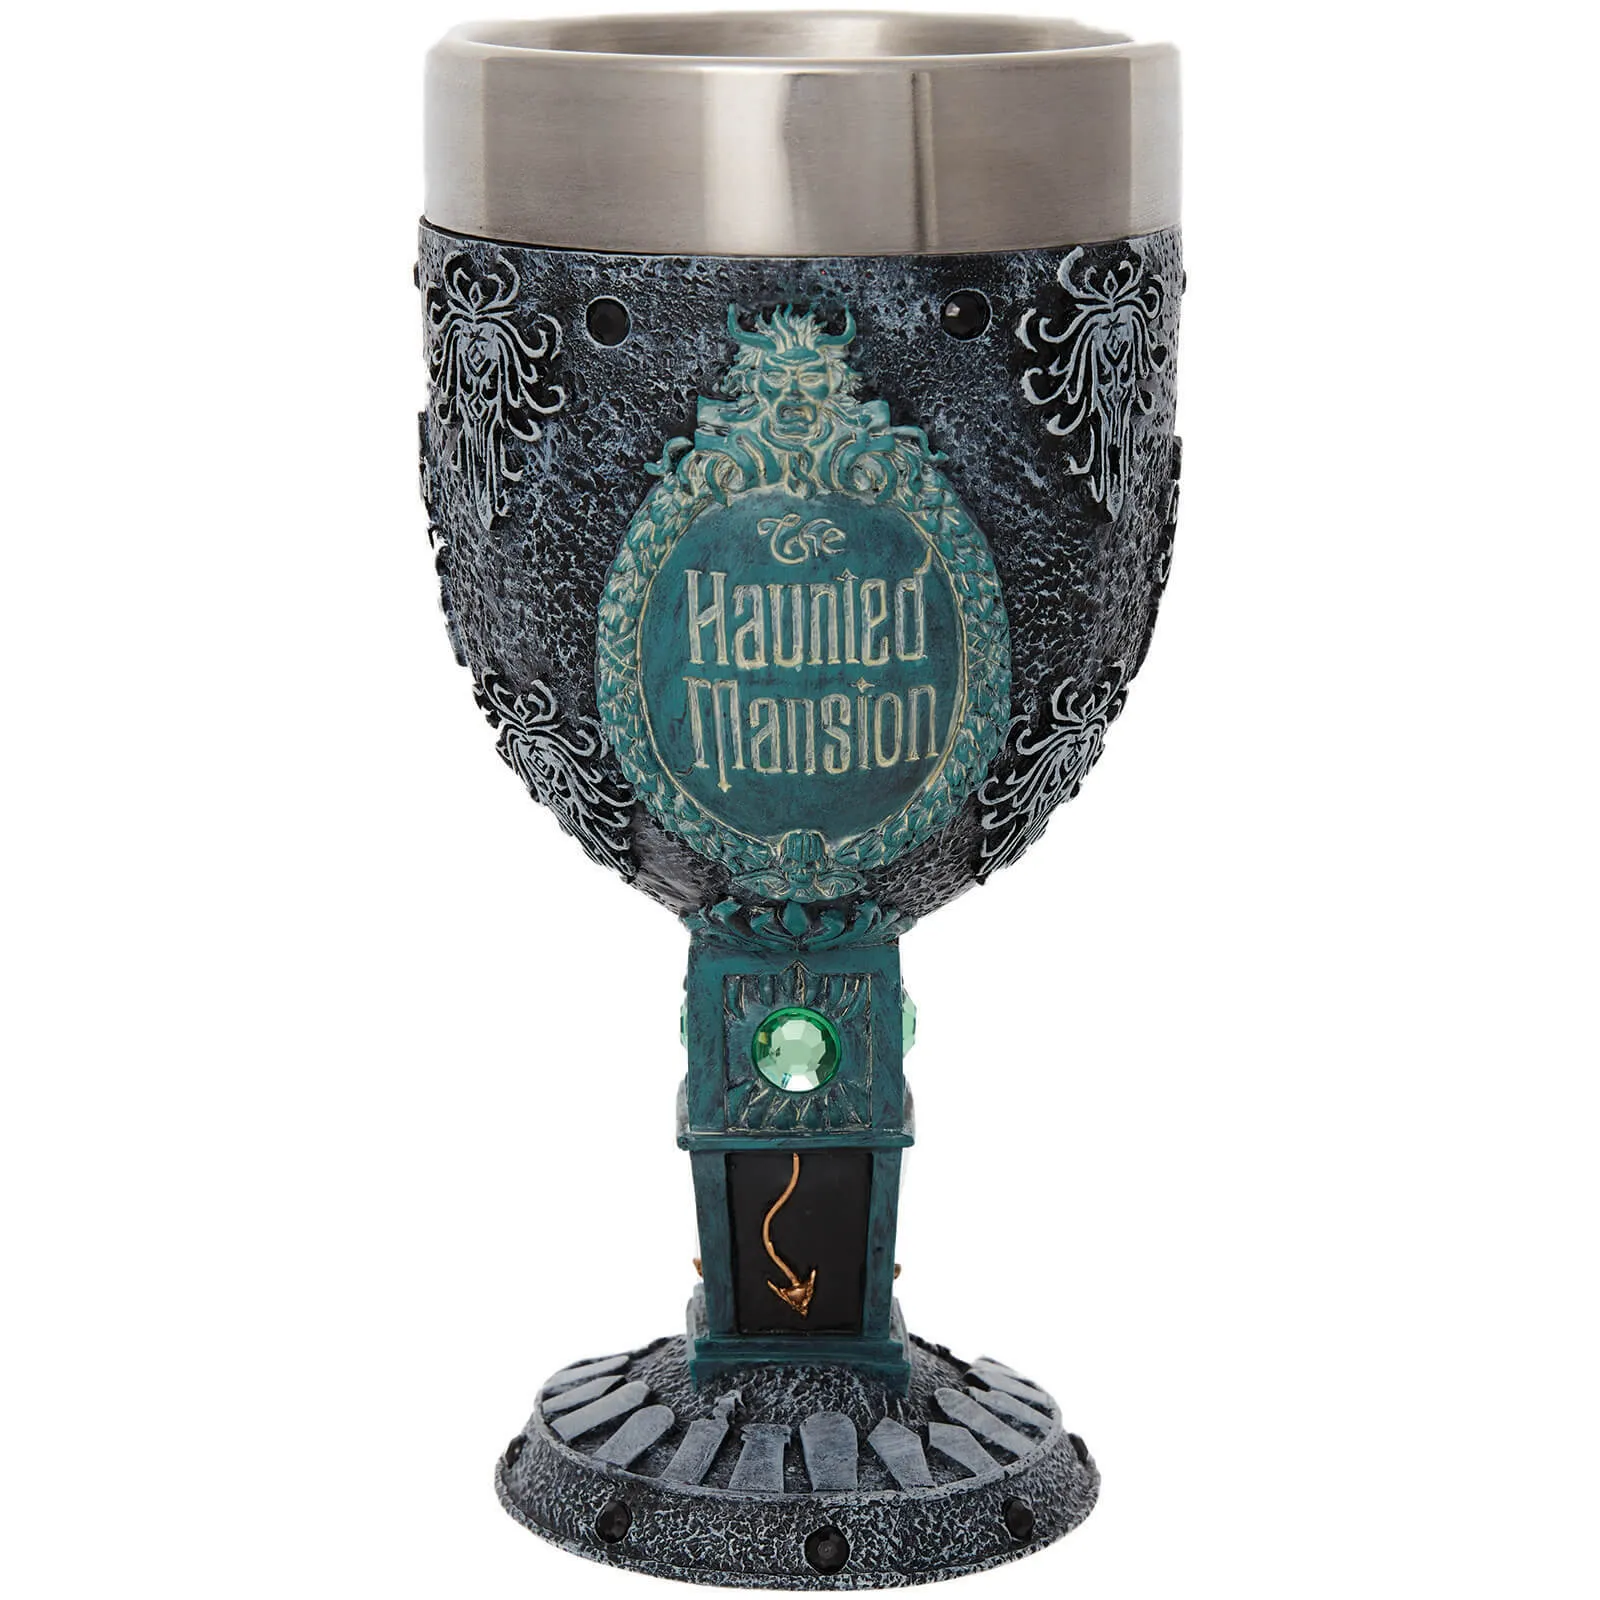  Haunted Mansion Goblet